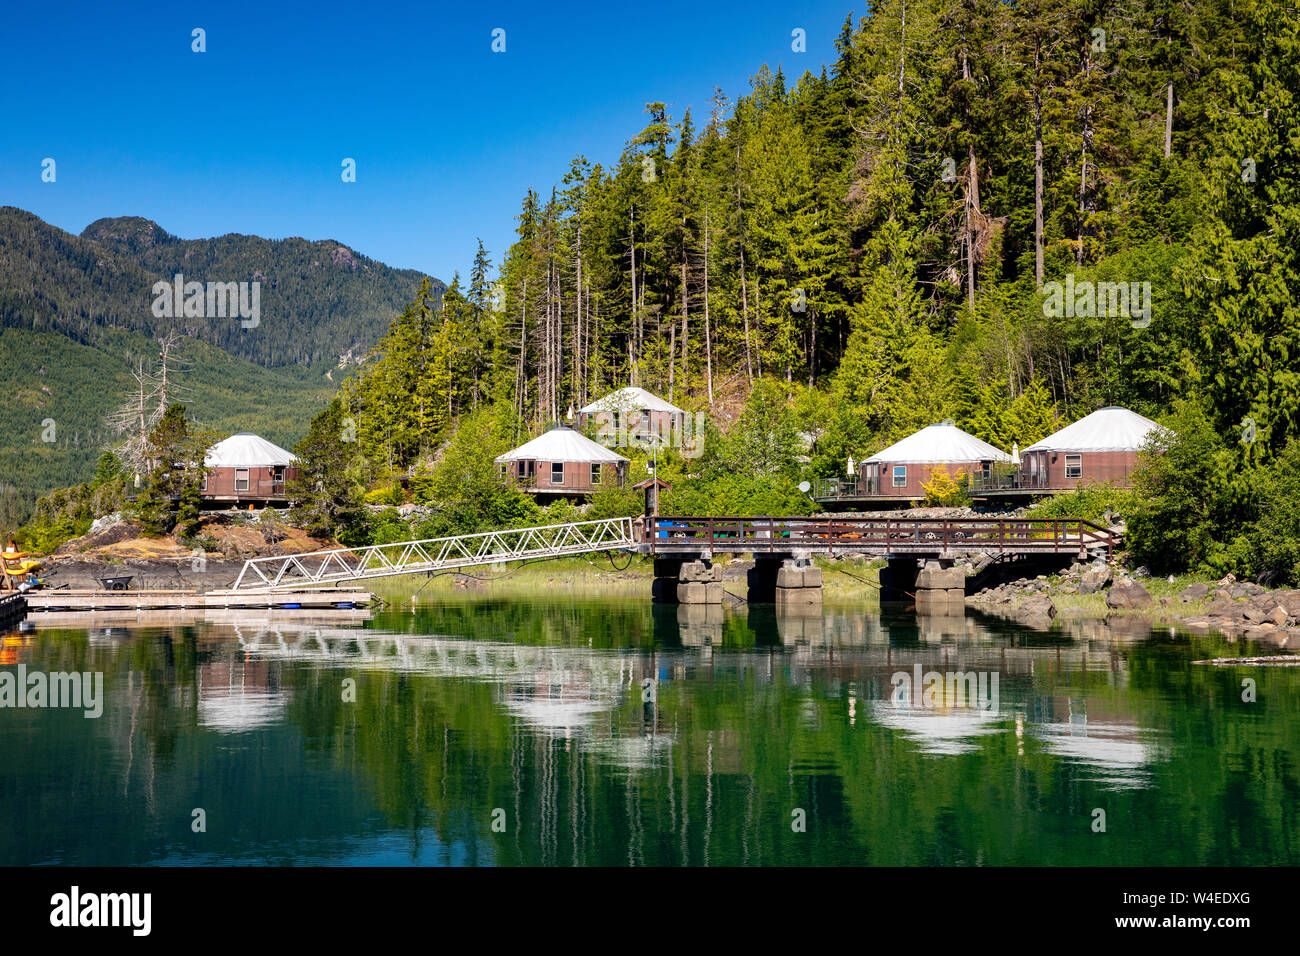 Jurten bei Moutcha Bay Resort and Marina - Tahsis, Vancouver Island, British Columbia, Kanada Stockfoto